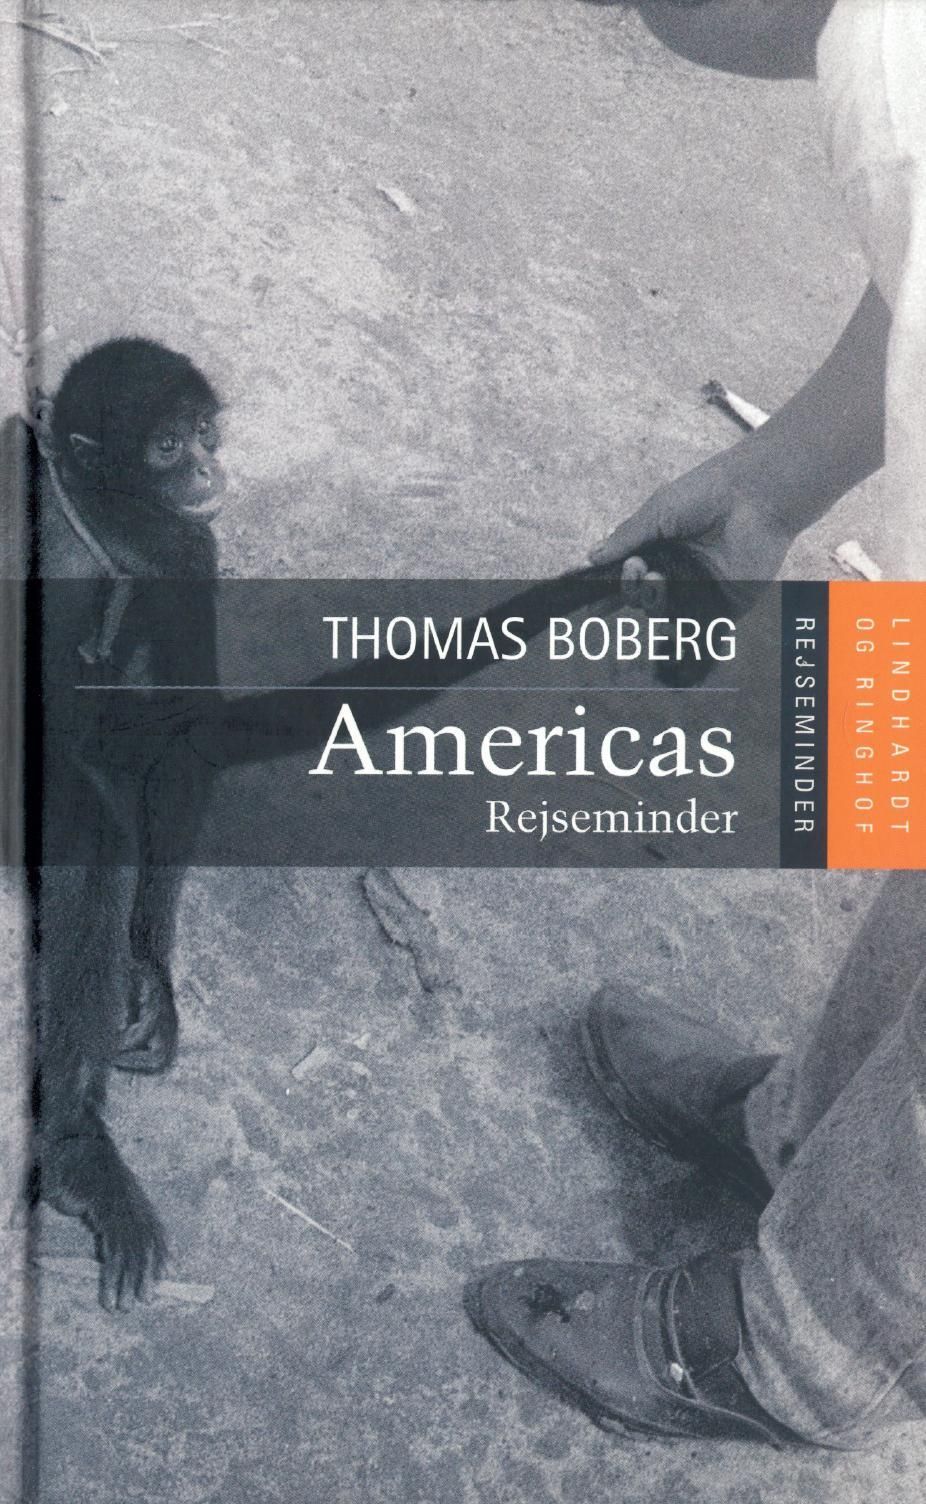 Americas - rejseminder, audiobook by Thomas Boberg